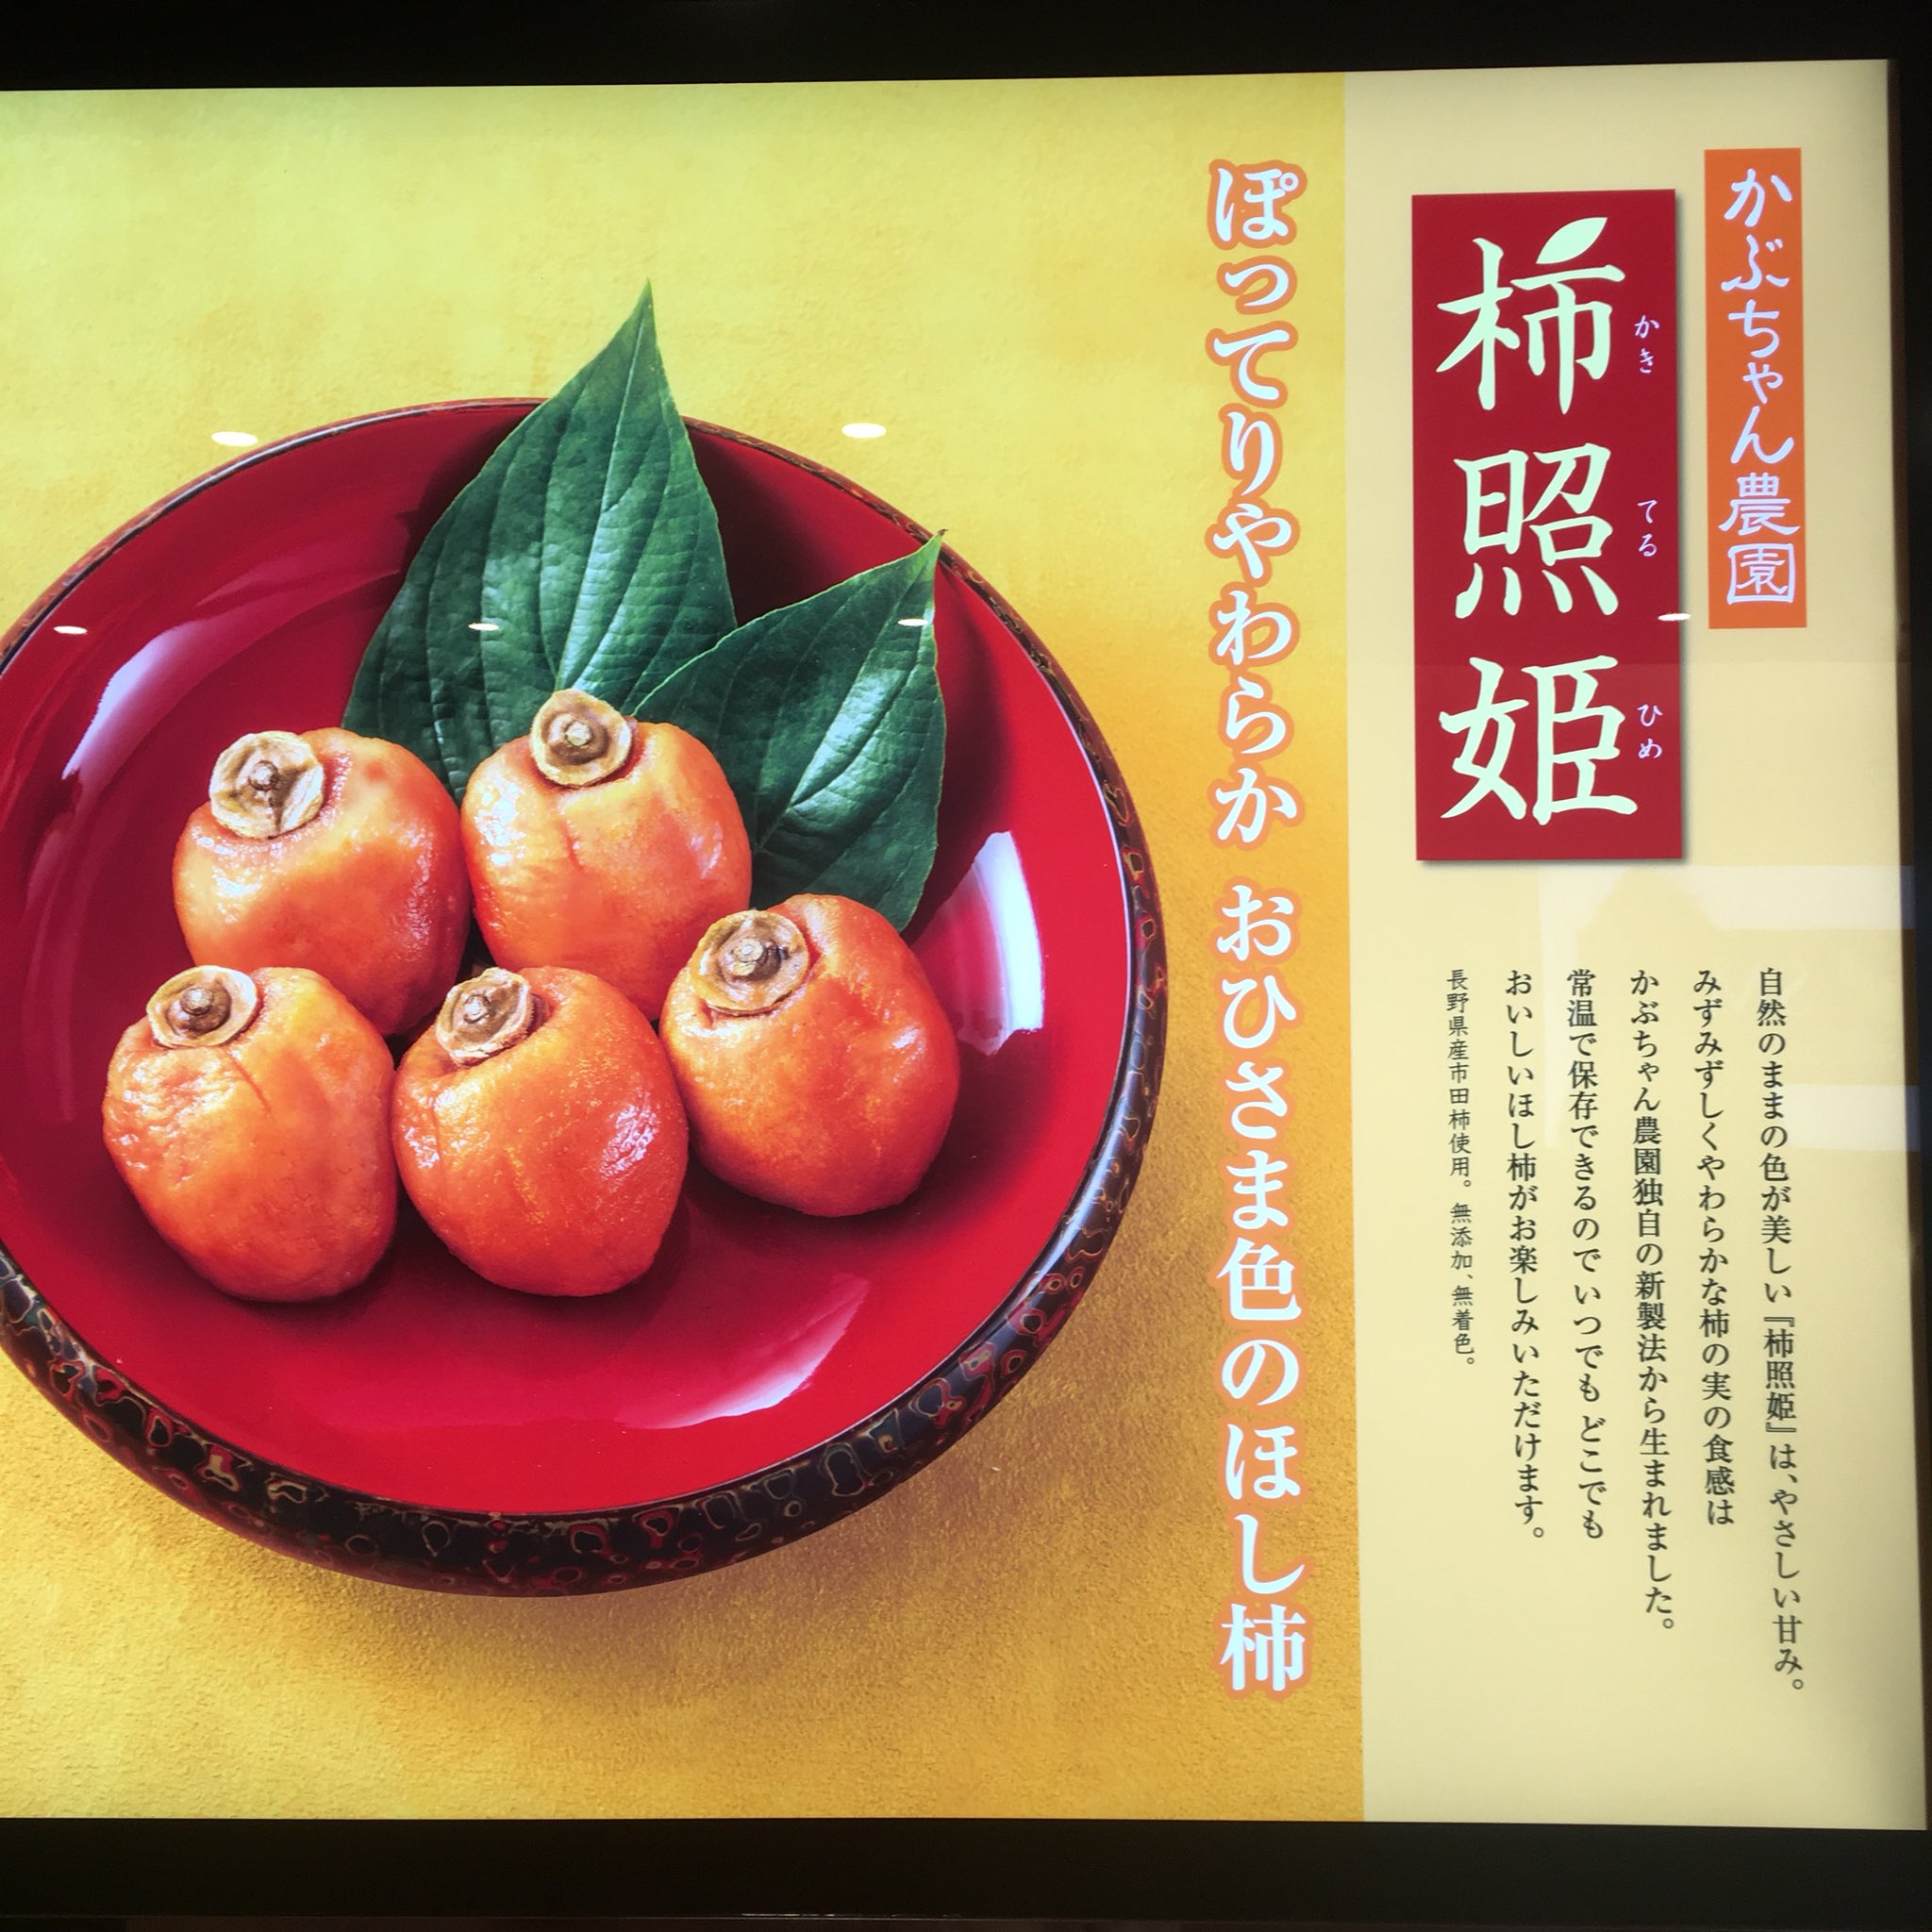 aka kurumizm on Twitter: "かぶちゃん農園は歌舞伎座地下に電光広告、売店にも柿を出していた！ケフィア事業振興会未払い